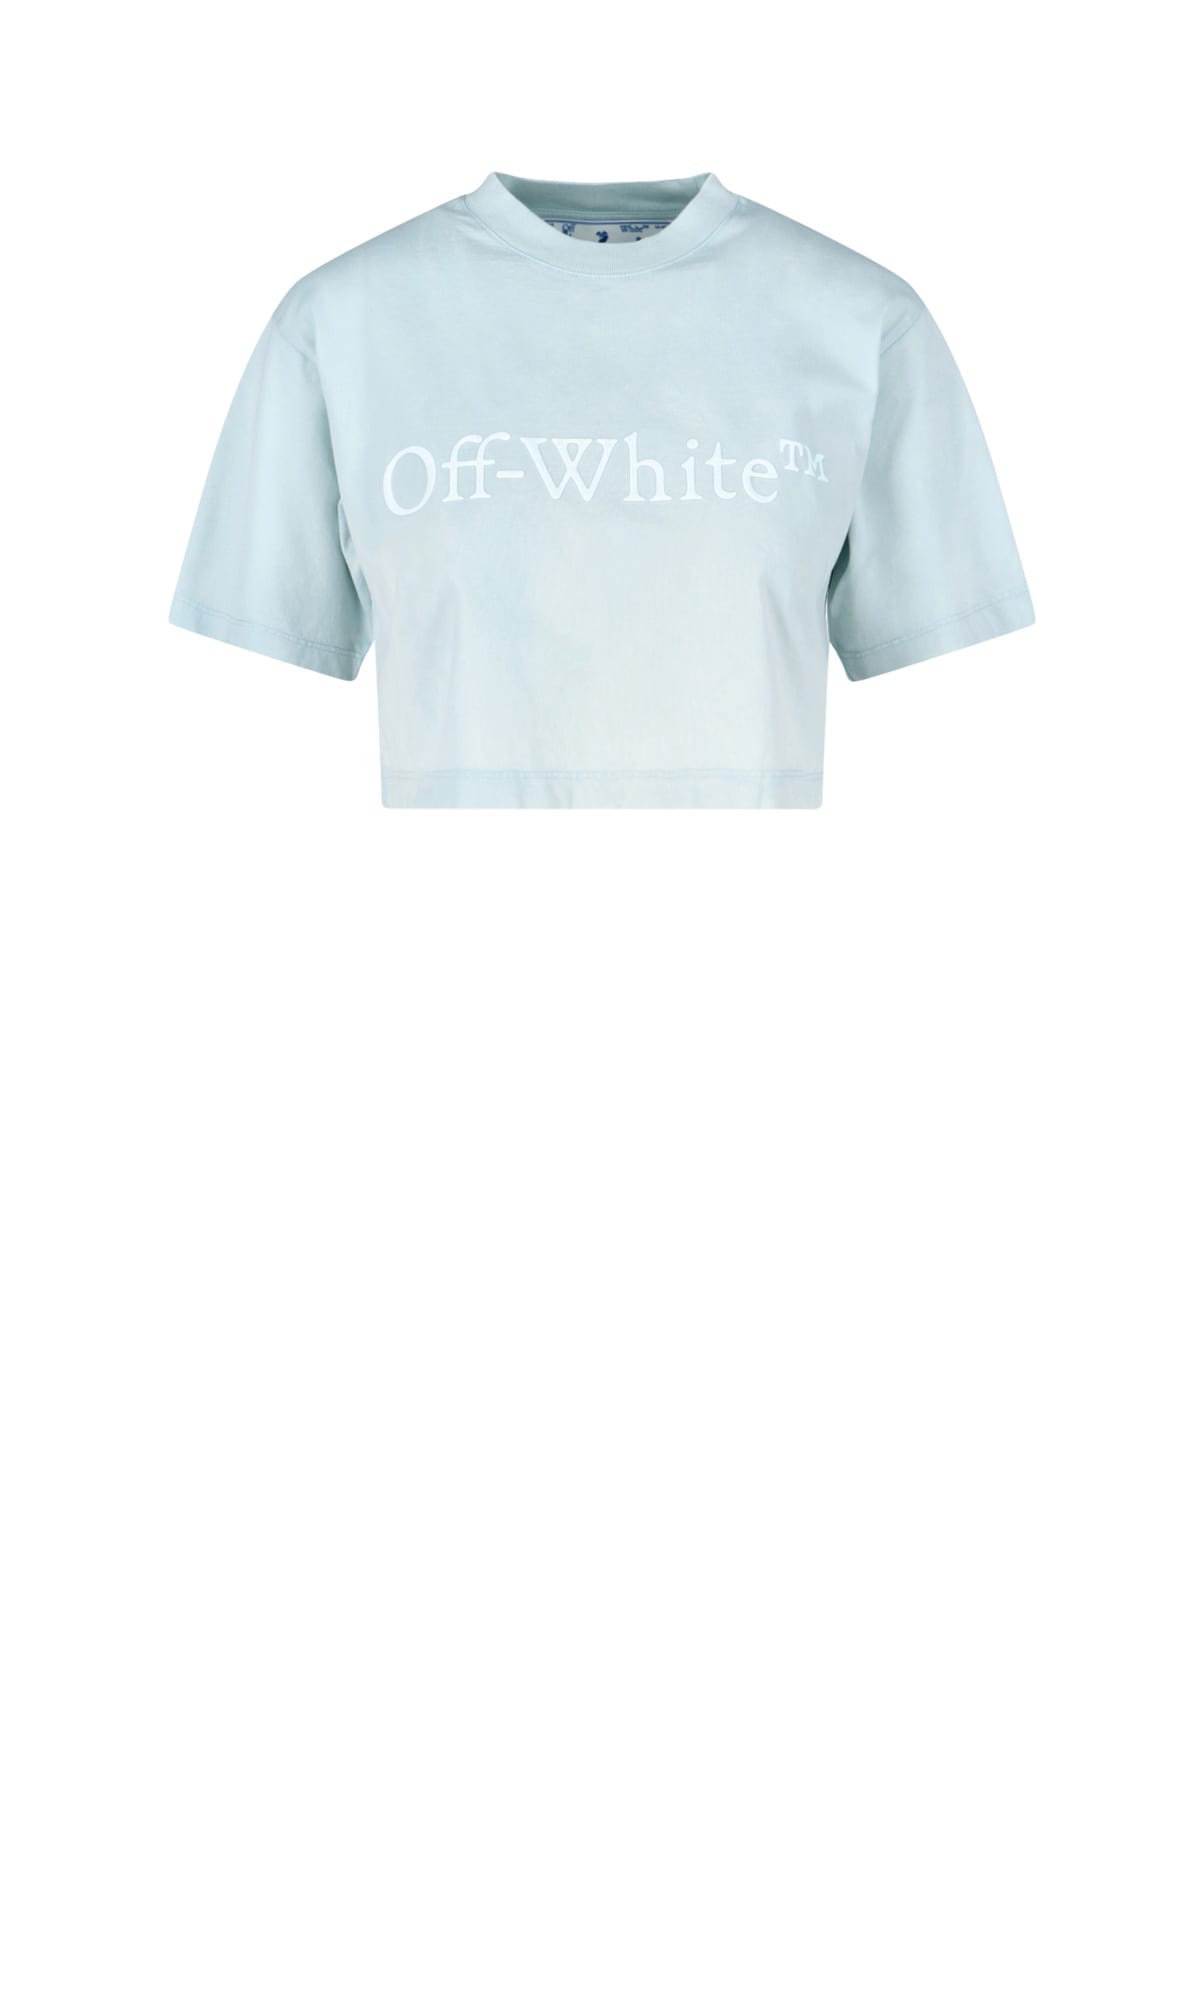 OFF-WHITE T-Shirts for Women | ModeSens